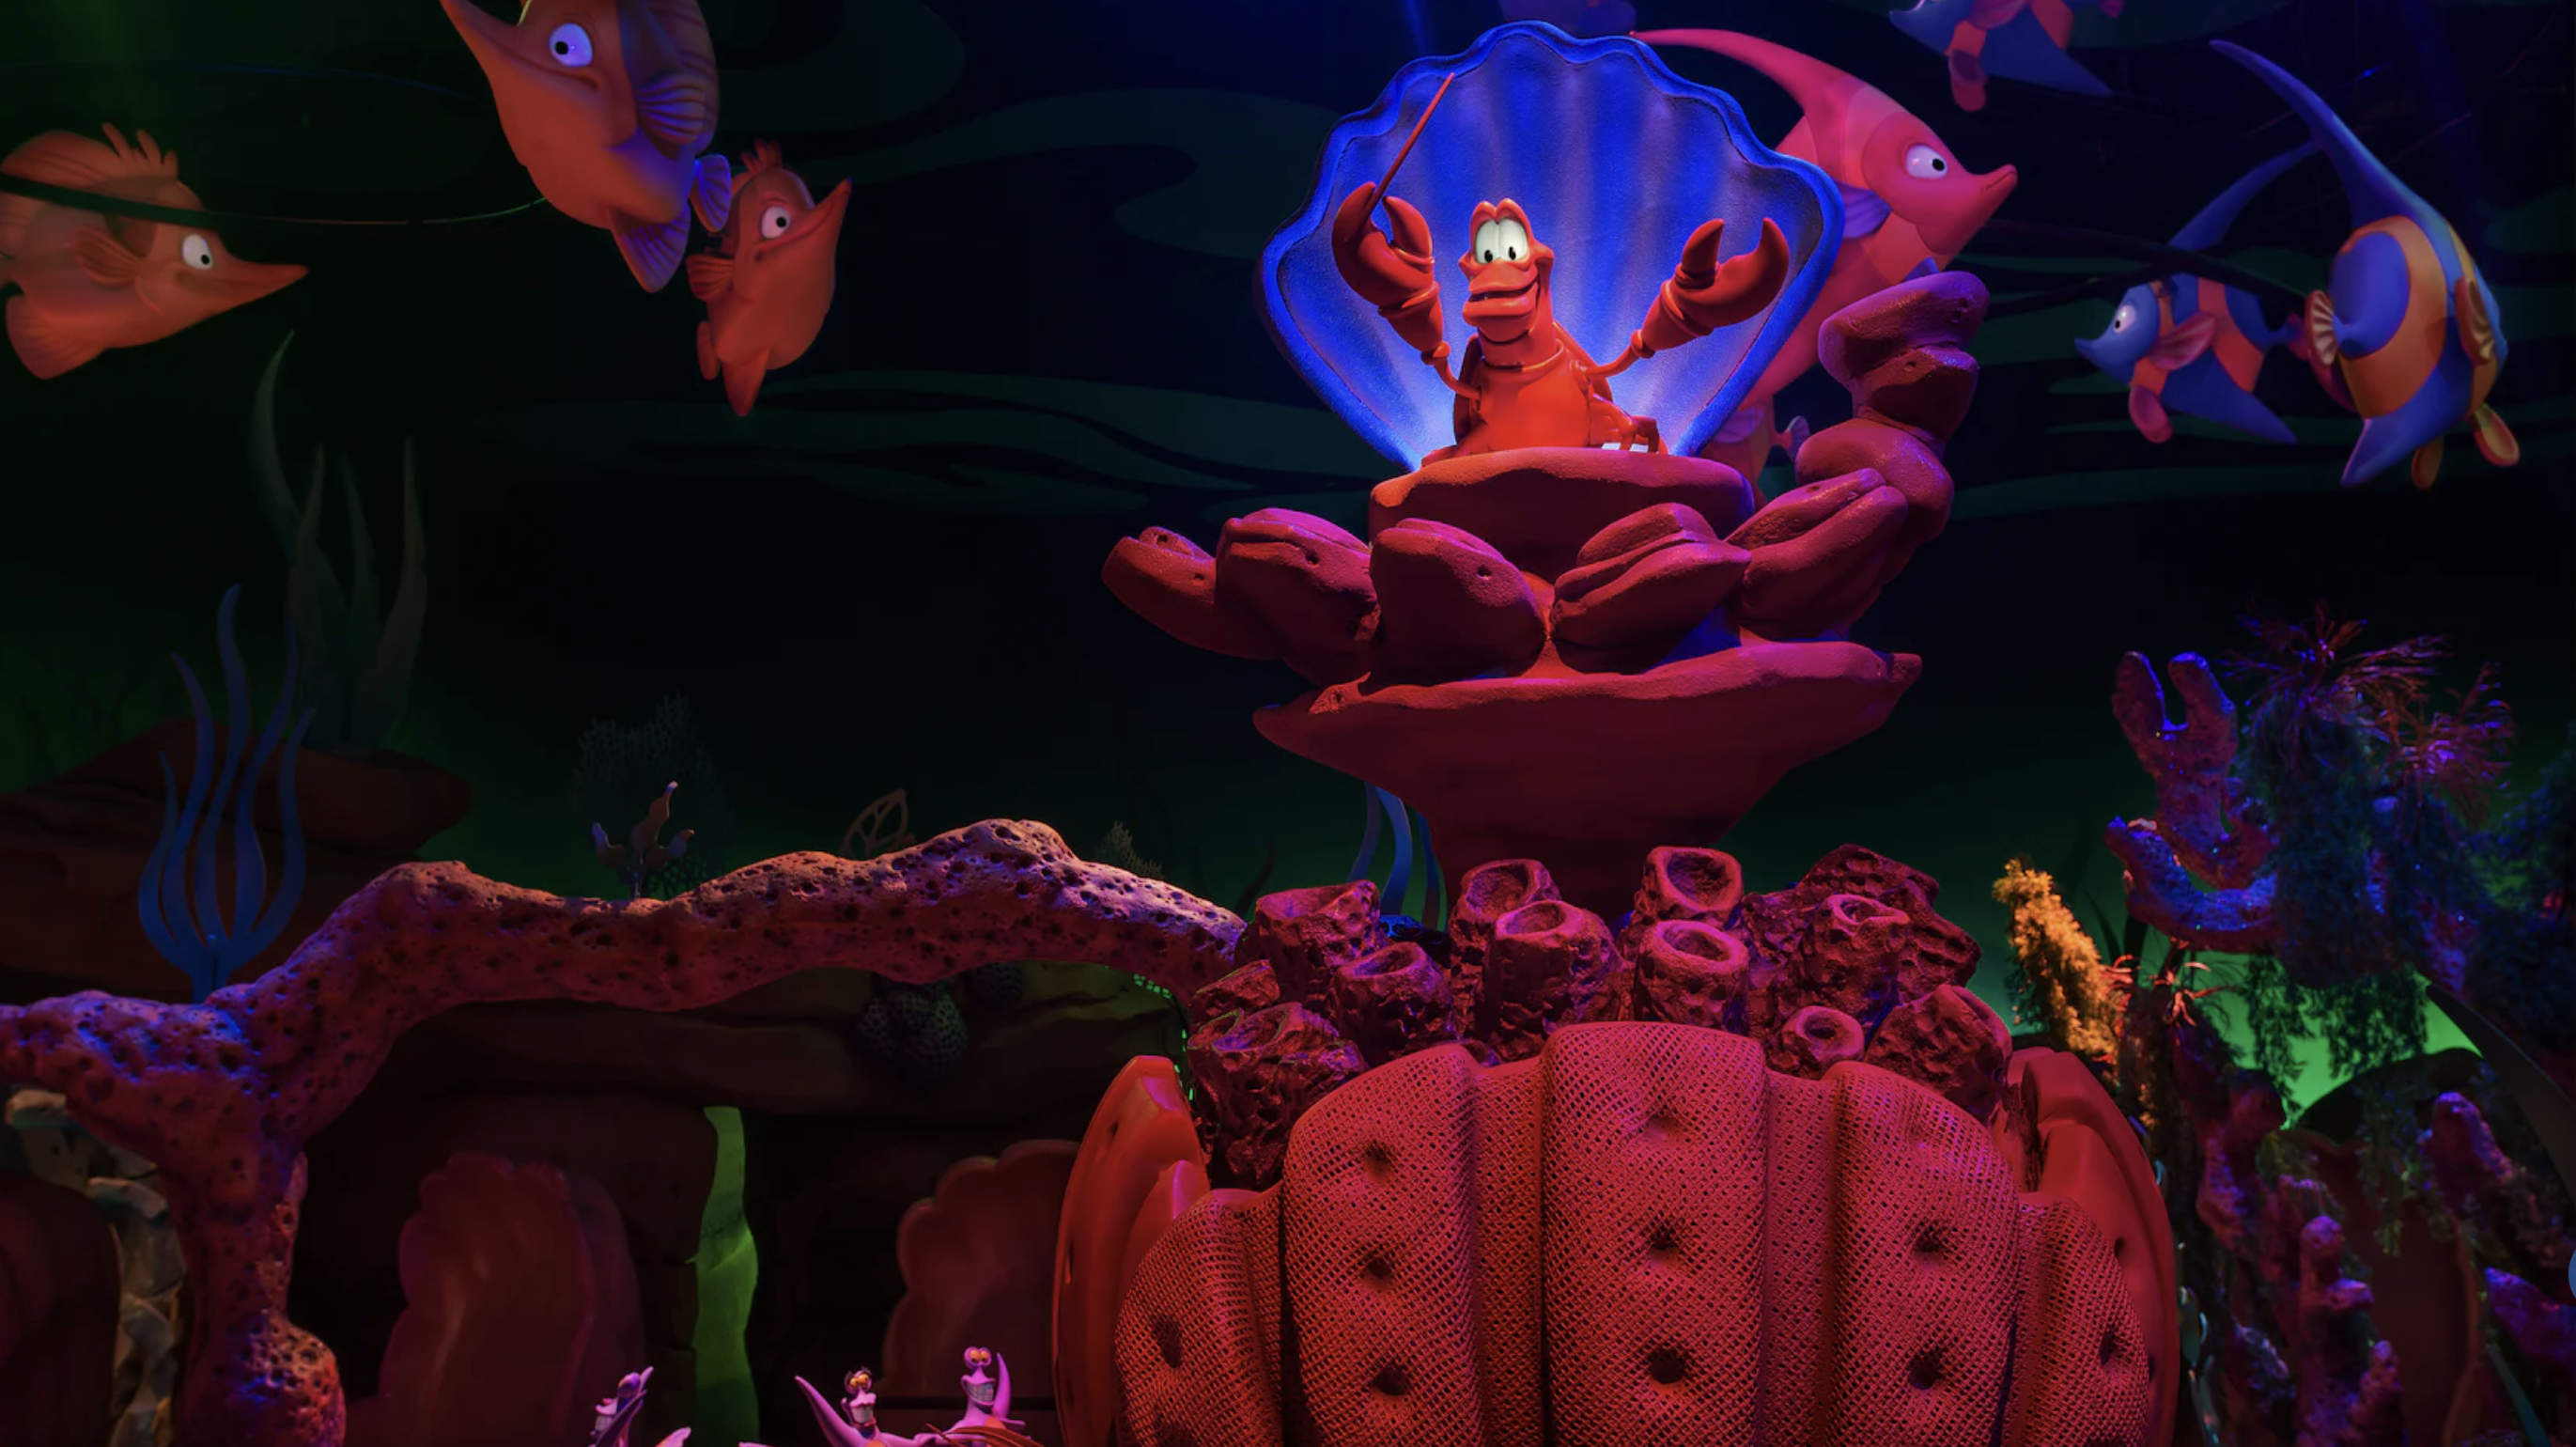 The Little Mermaid - Ariel's Undersea Adventure, Disneyland